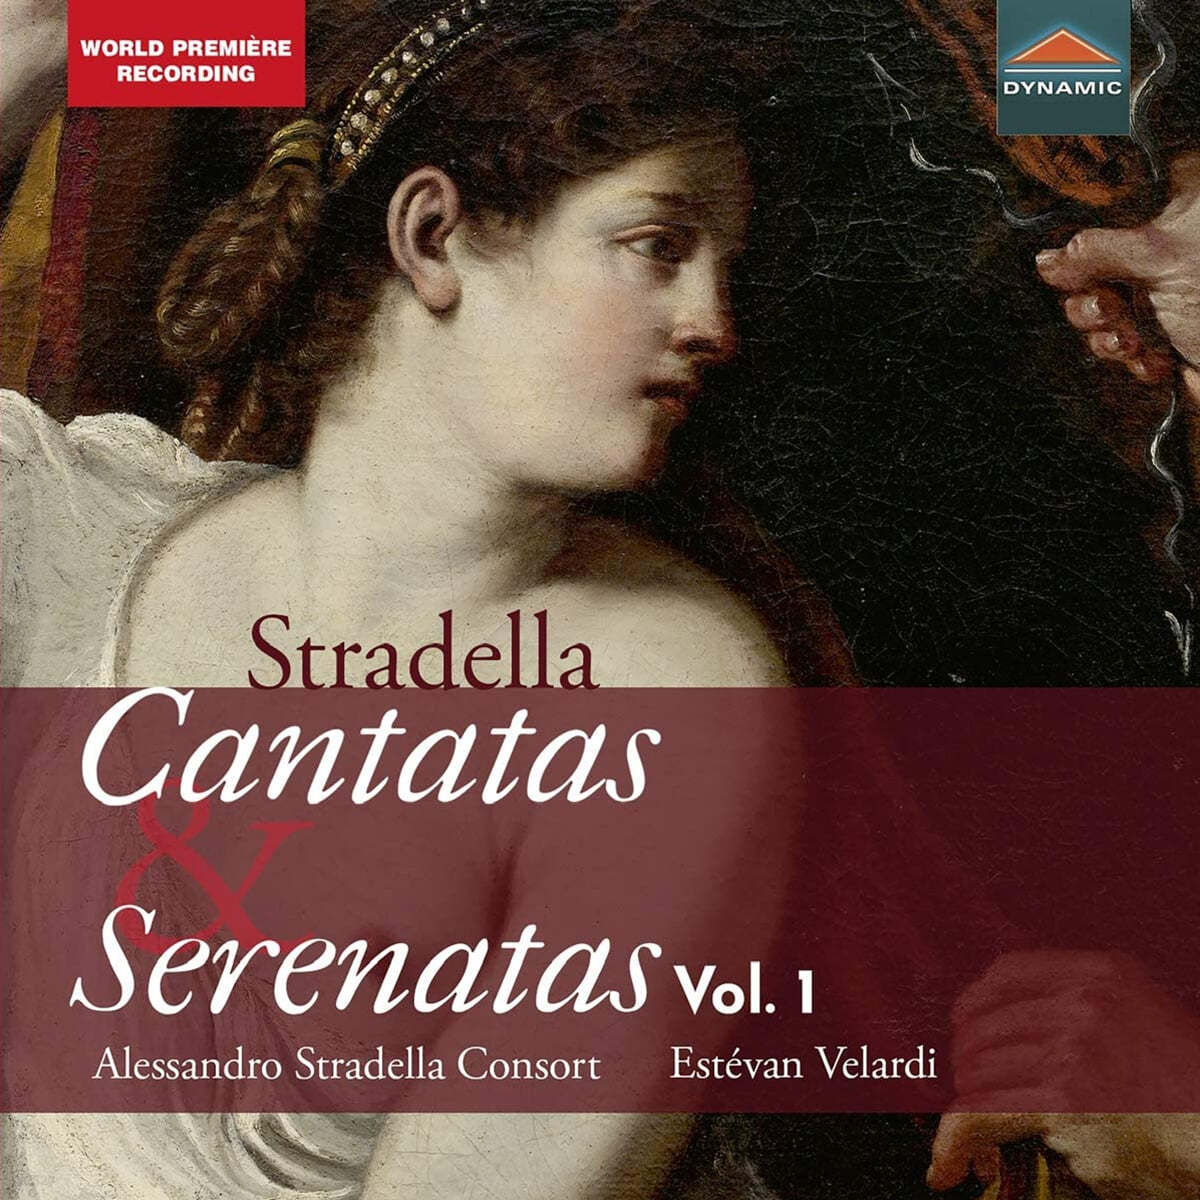 Alessandro Stradella Consort 스트라델라: 칸타타와 세레나타 1집 (Stradella: Cantatas and Serenatas Vol. 1)